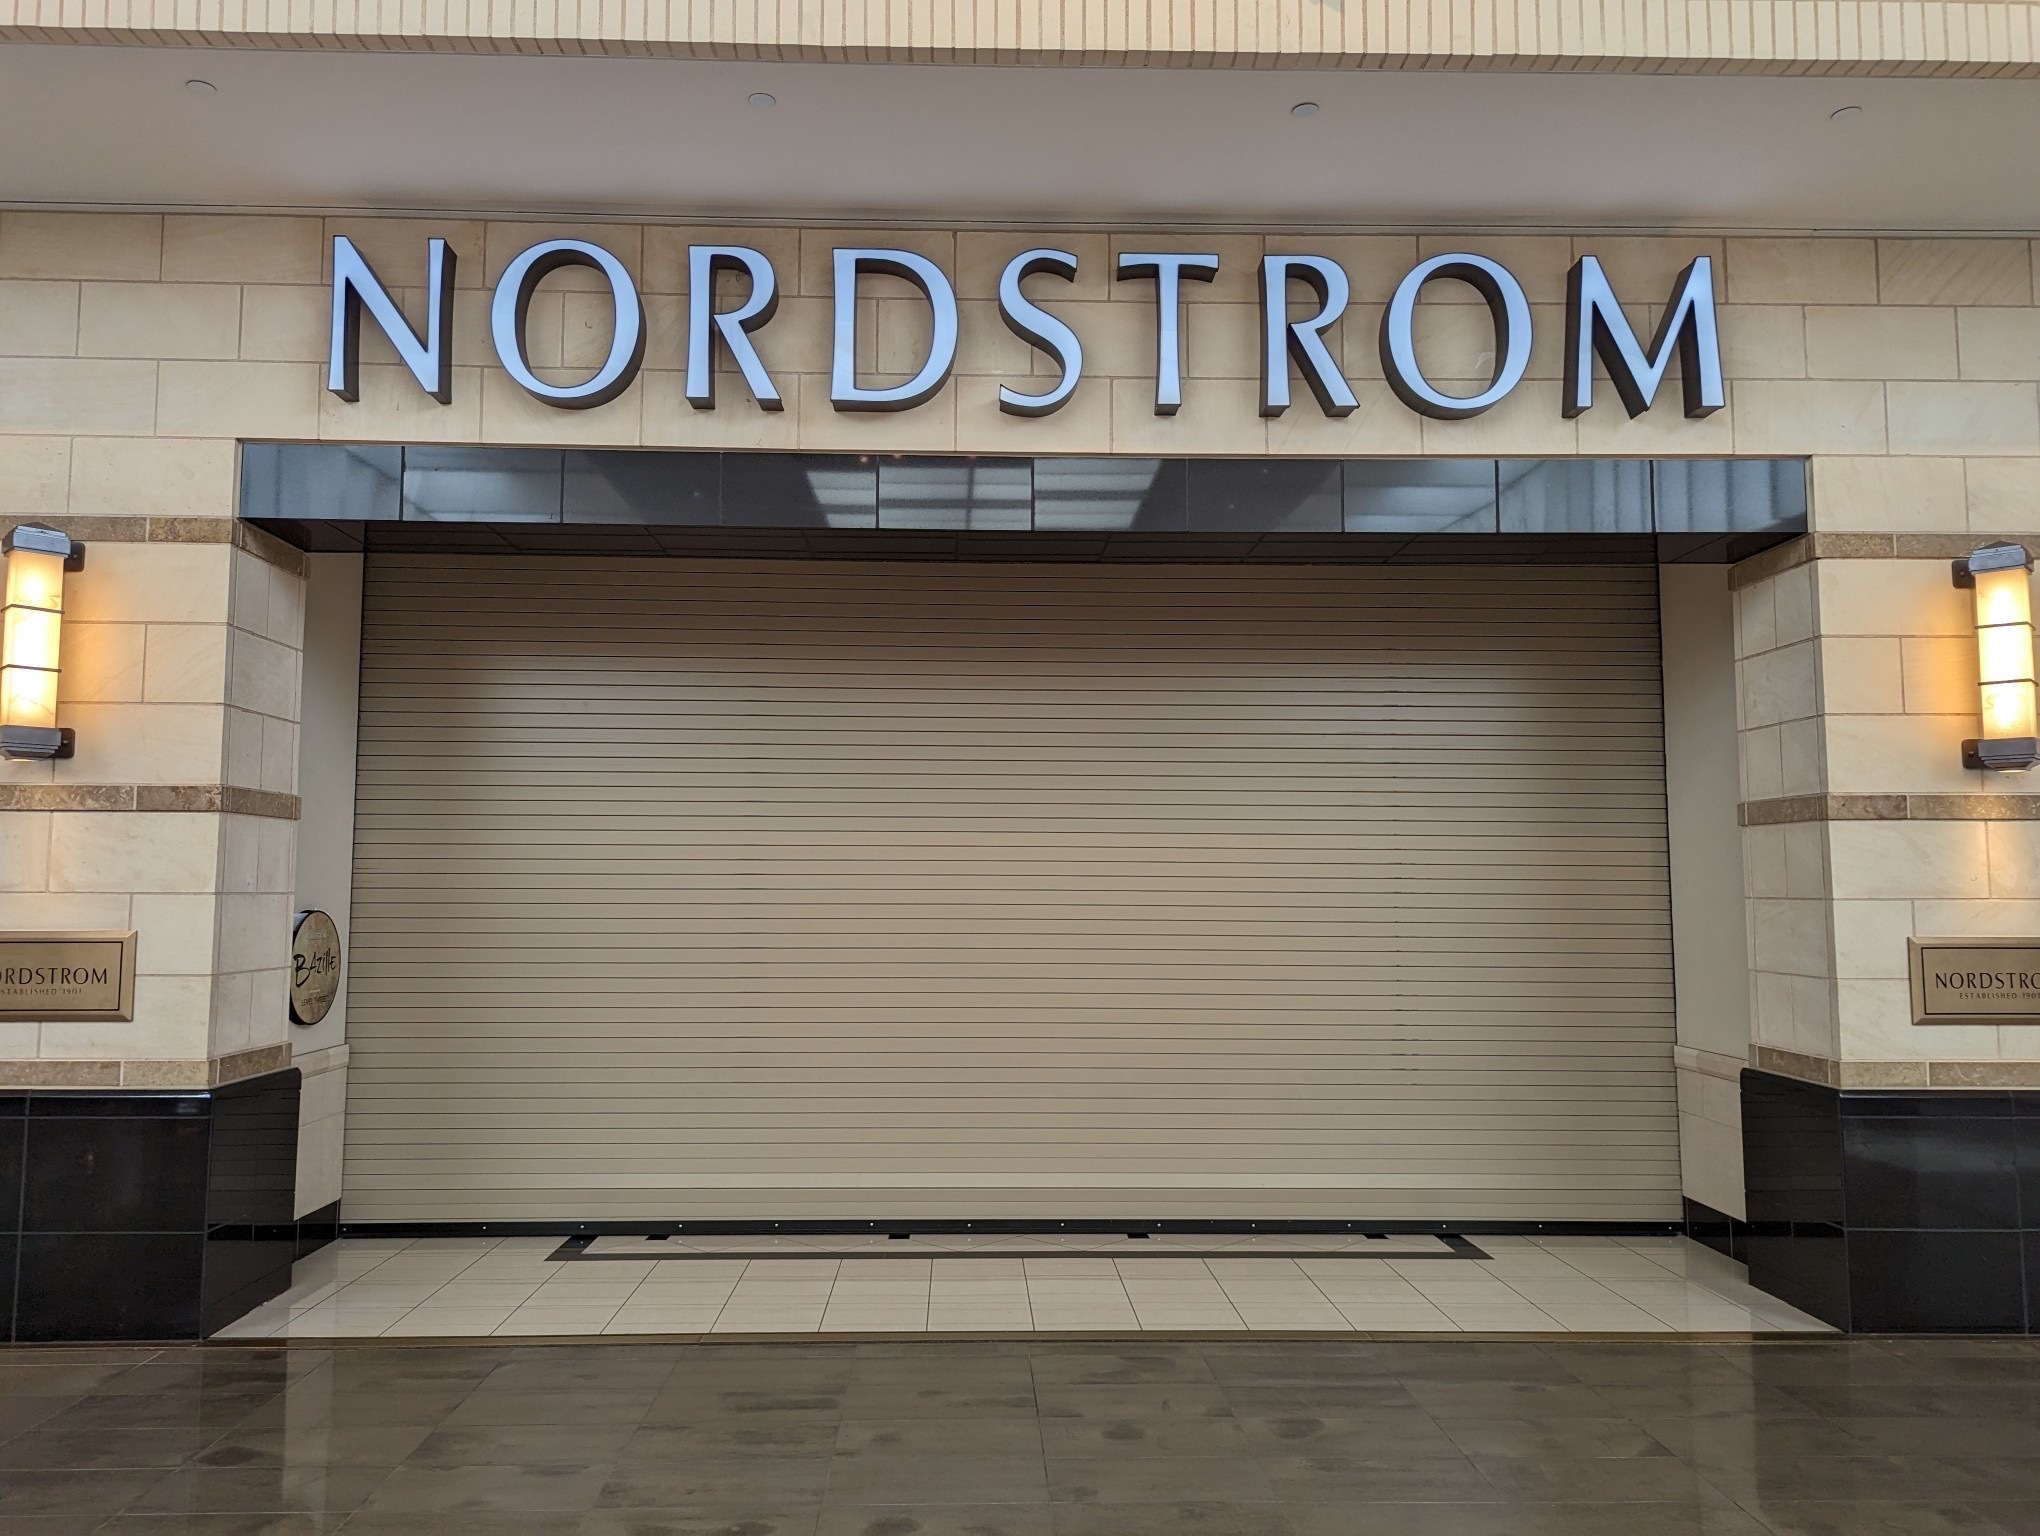 Northpark Mall acquired by California company